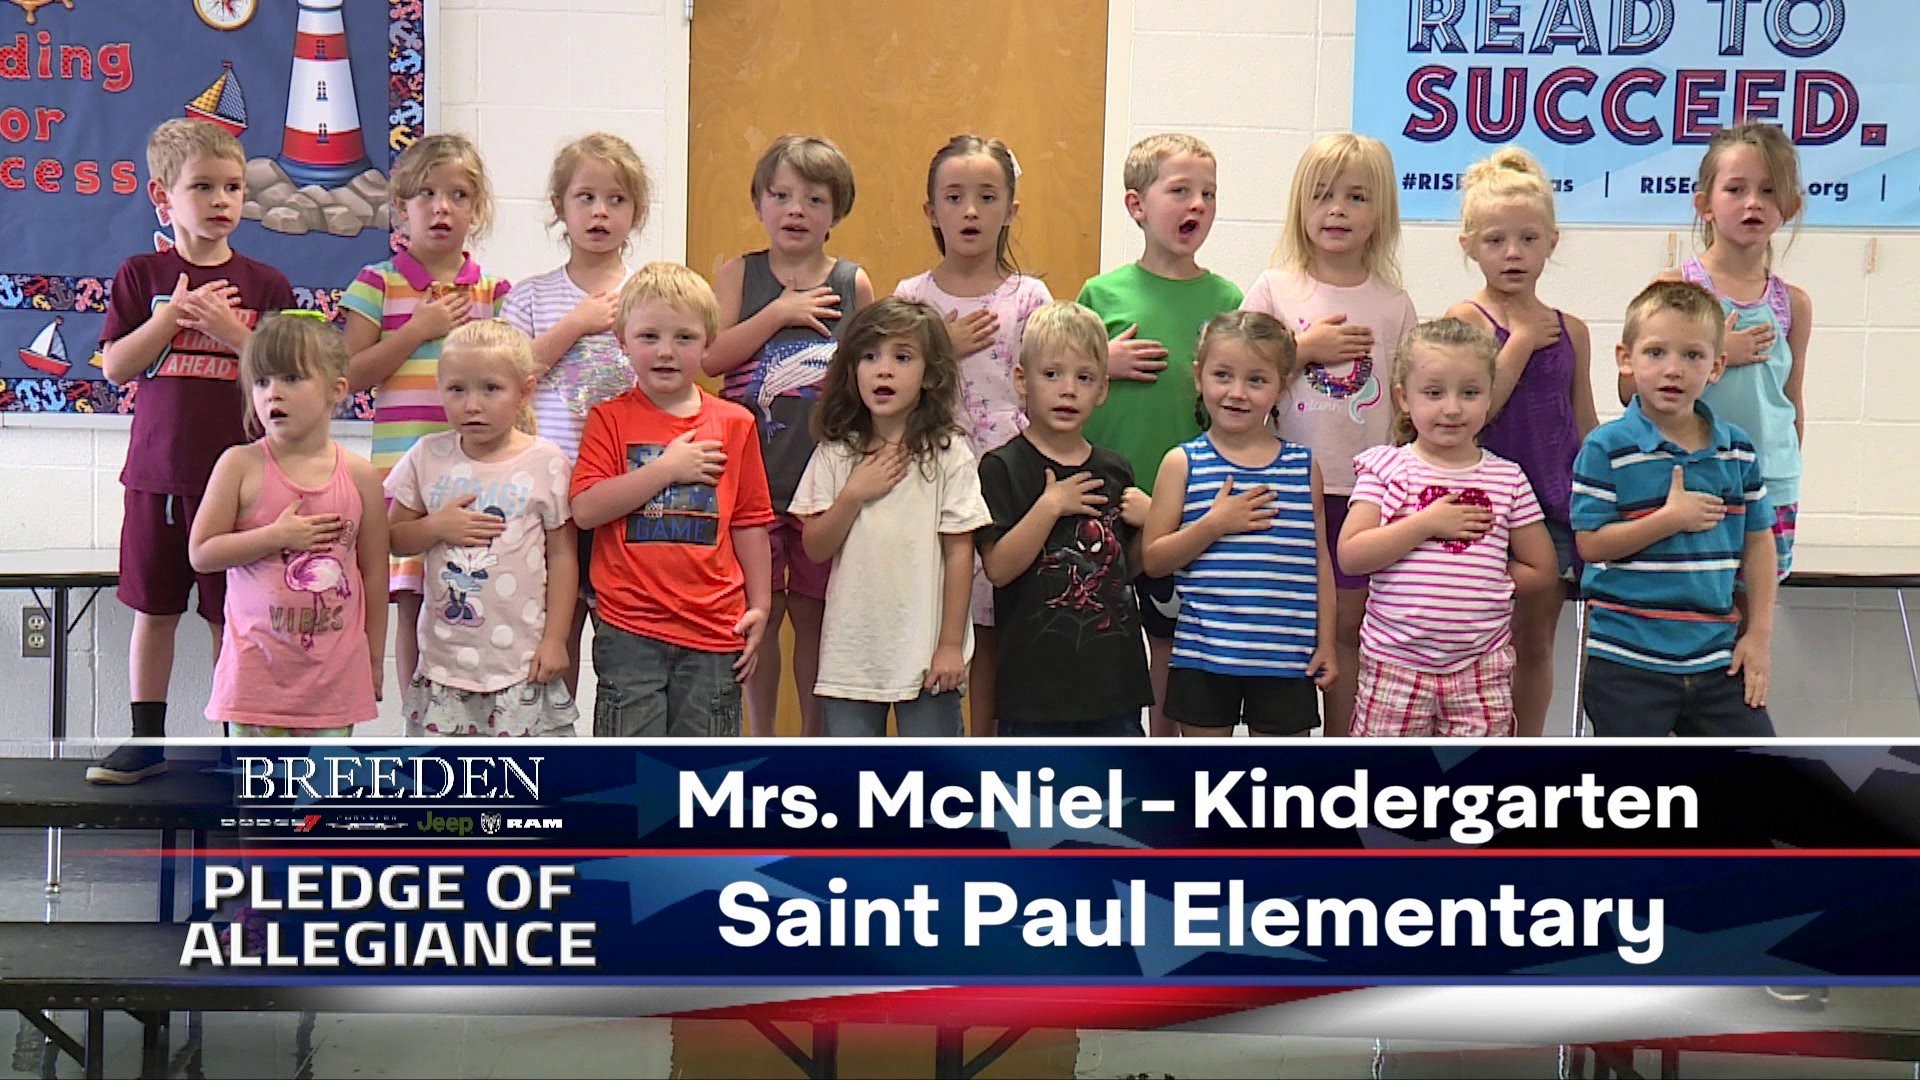 Mrs. McNiel Kindergarten Saint Paul Elementary